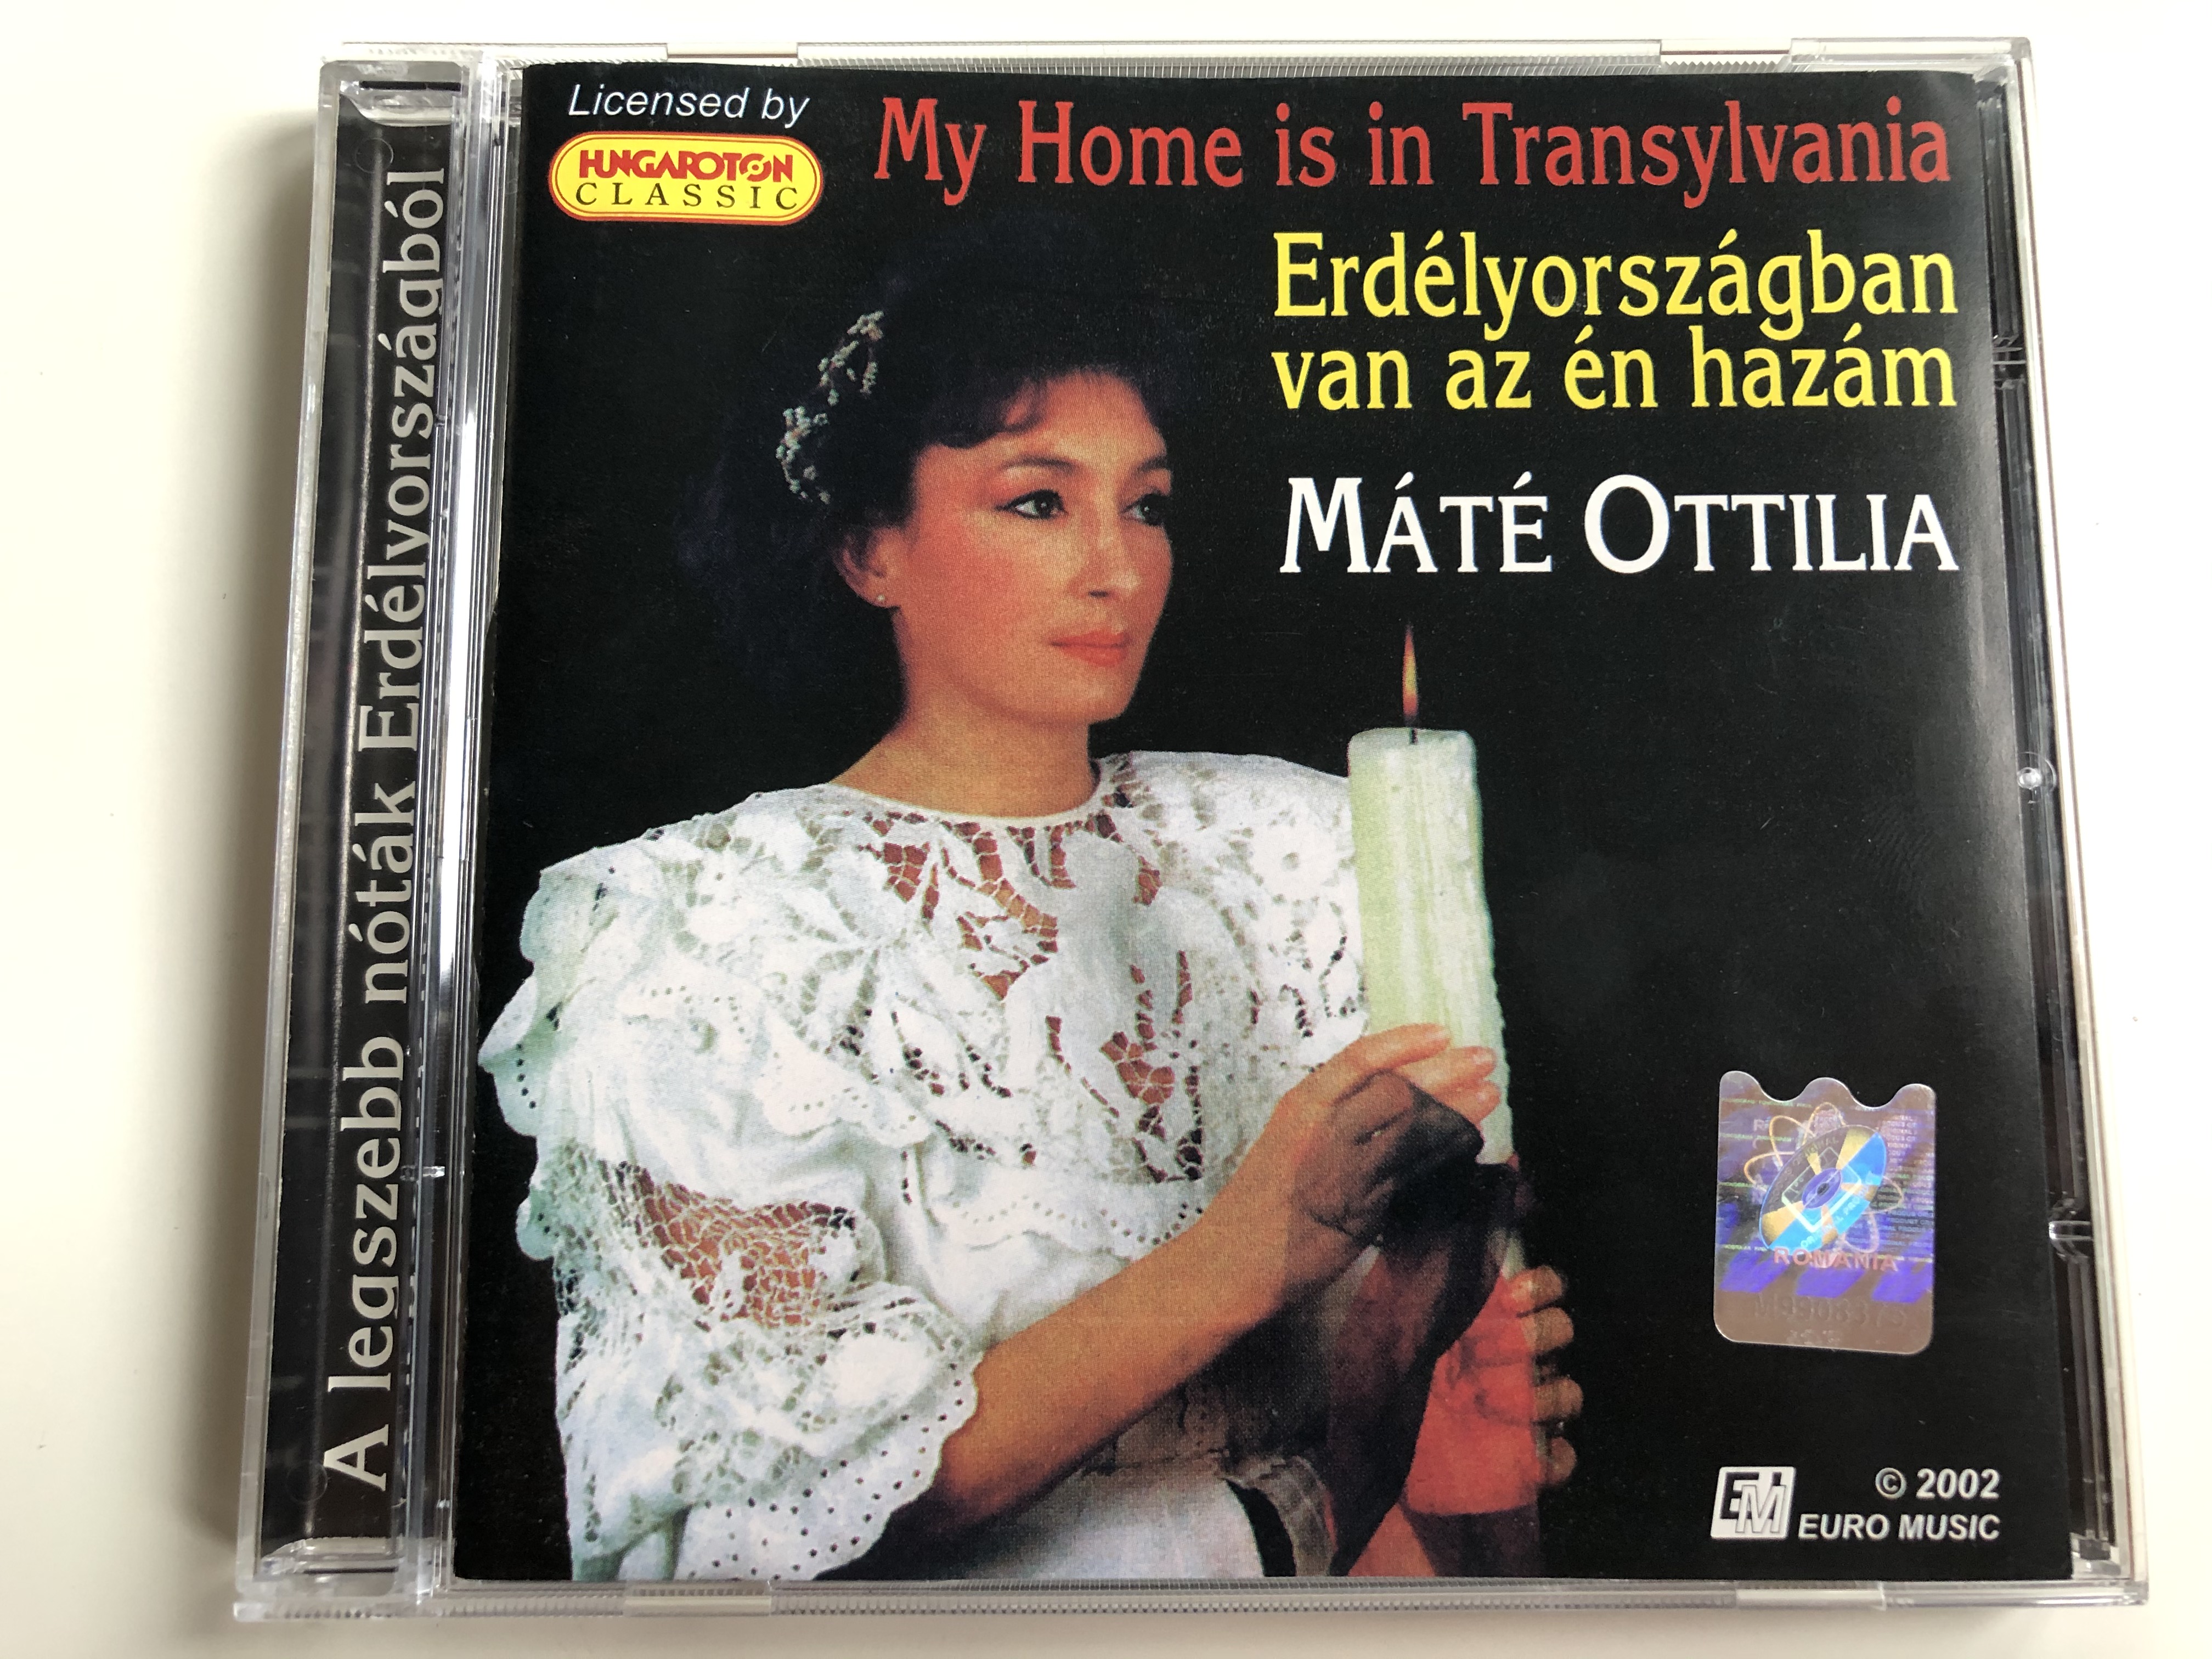 my-home-is-in-transylvania-erd-lyorsz-gban-van-az-n-haz-m-m-t-ott-lia-hungaroton-classic-audio-cd-2002-101274-1-.jpg